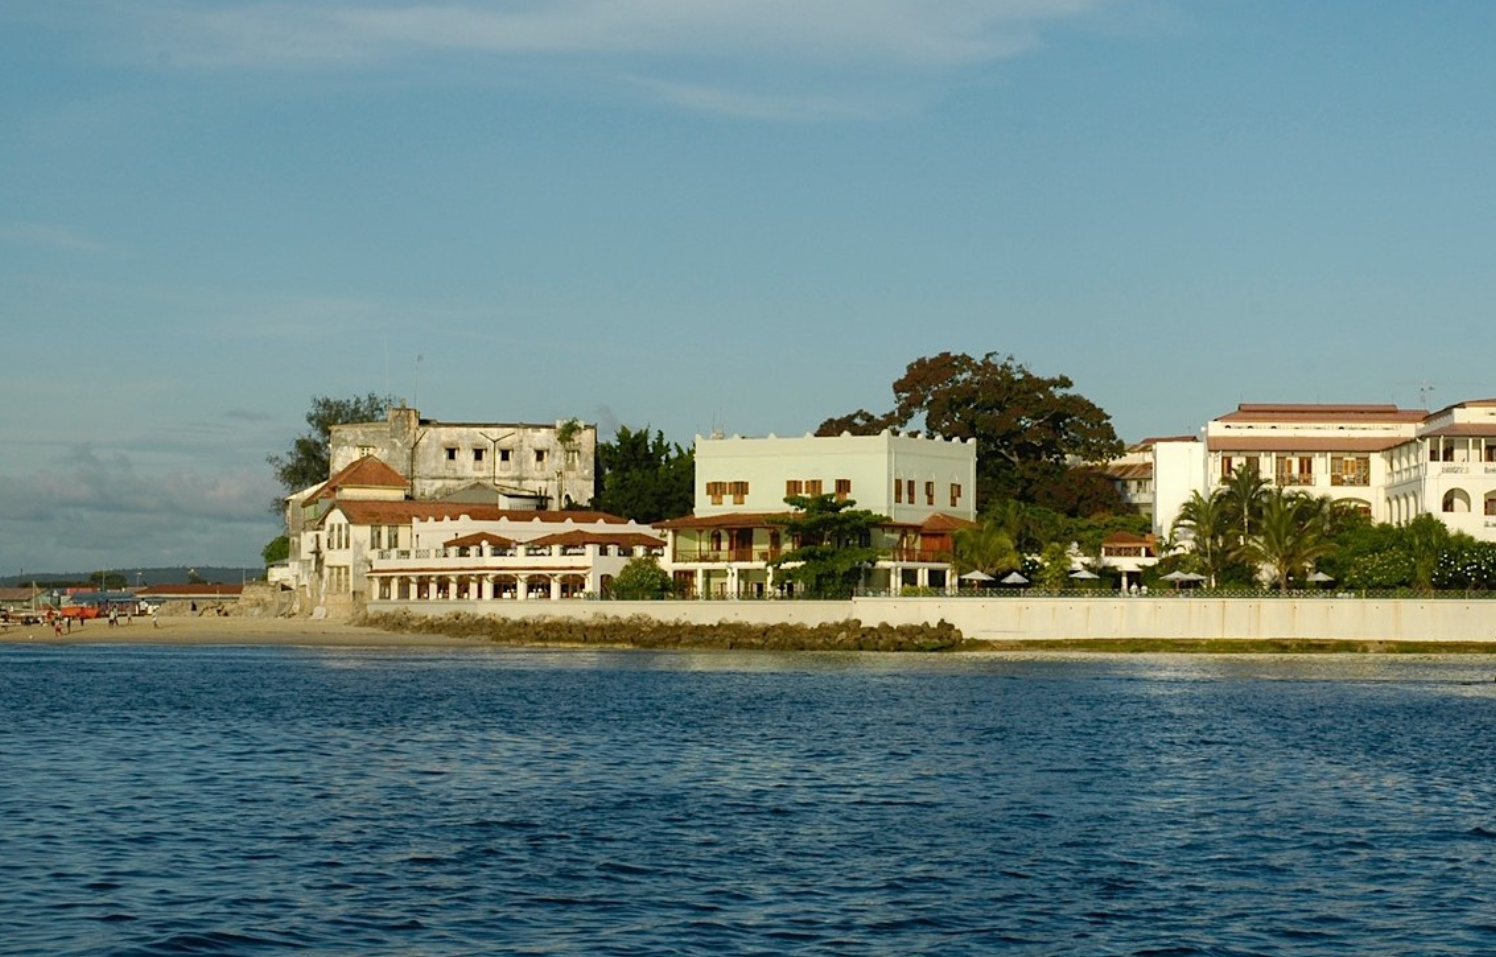 Zanzibar Serena Hotel exterior from the water